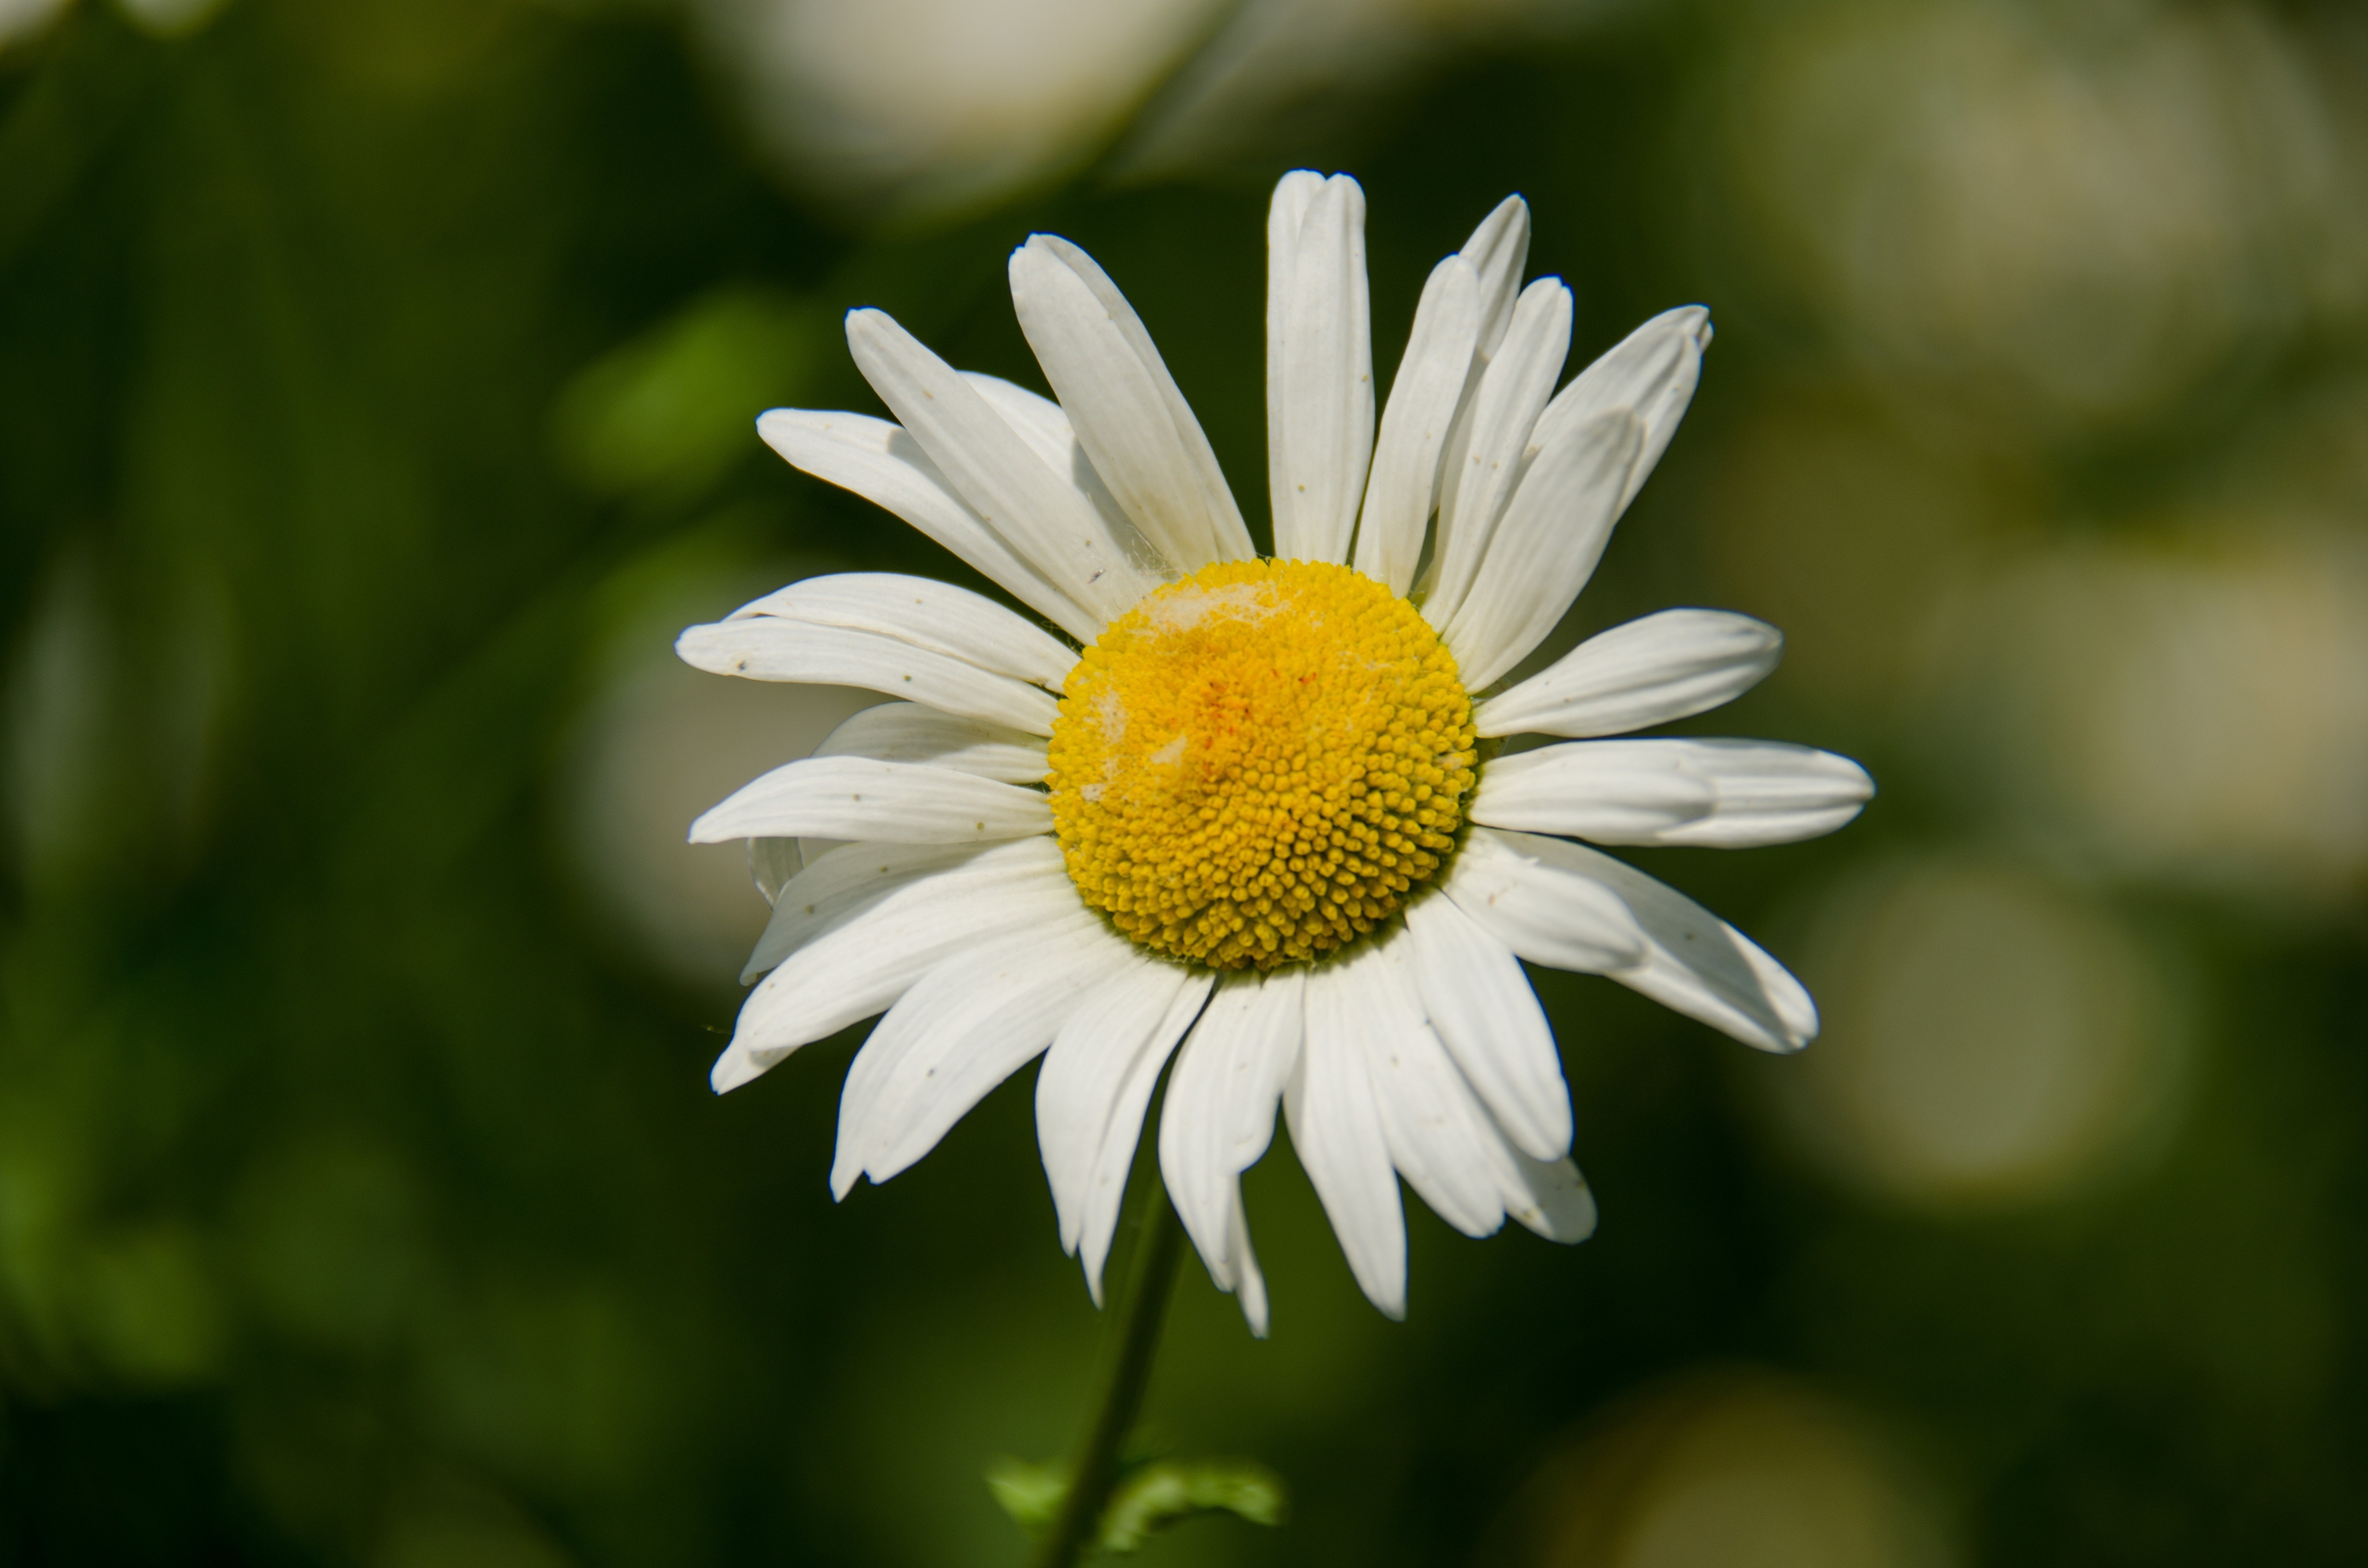 photo of white and yellow Daisy flower bud